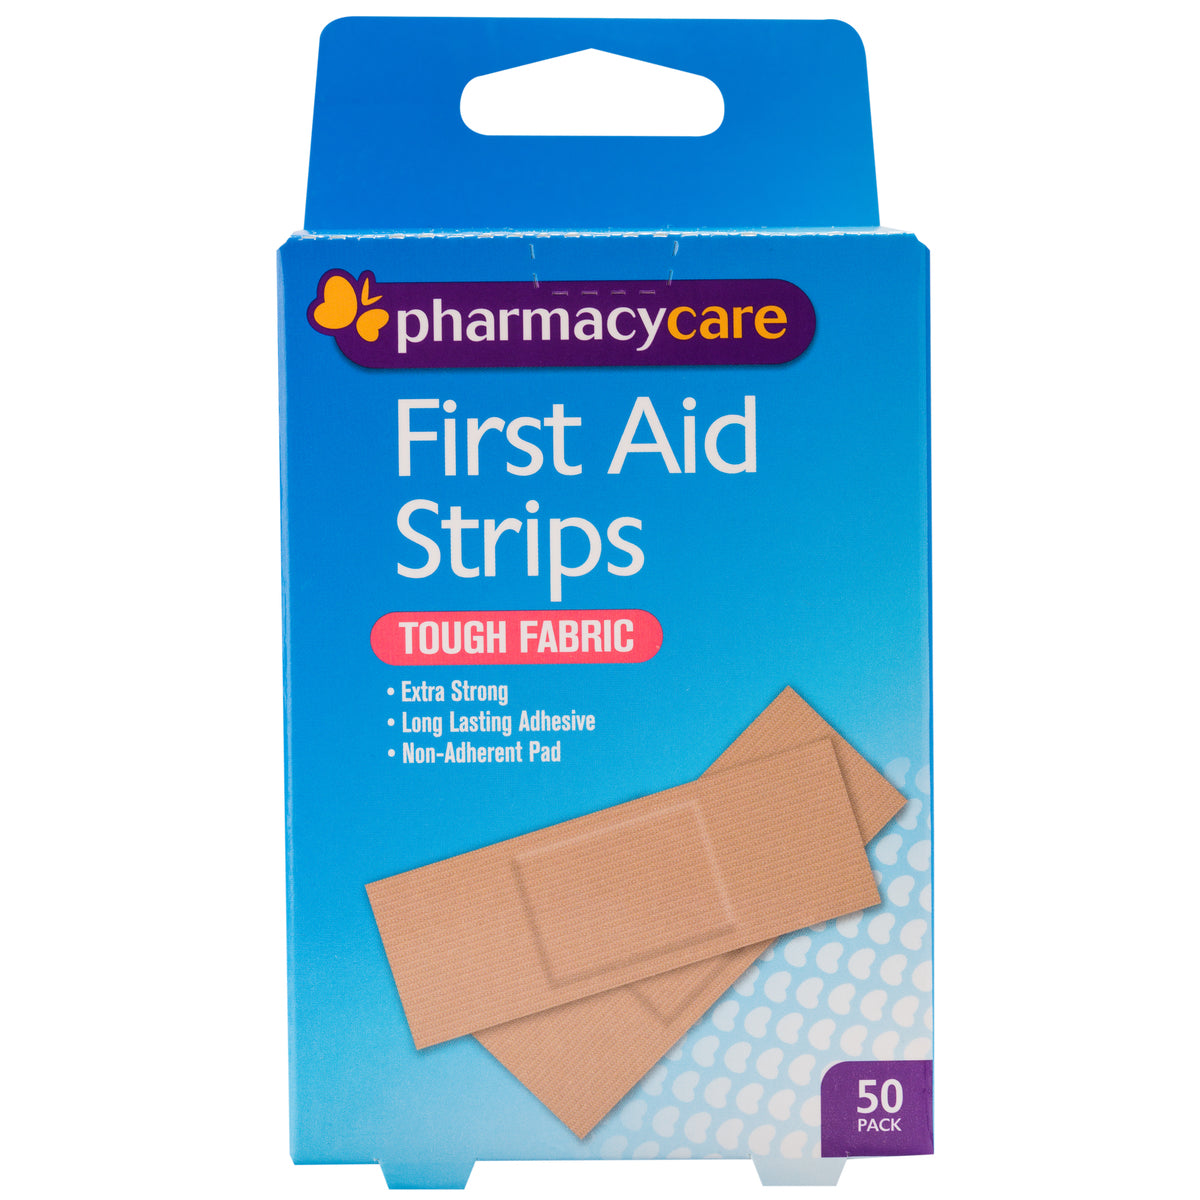 Pharmacy Care First Aid Strip Fabric Tough 50